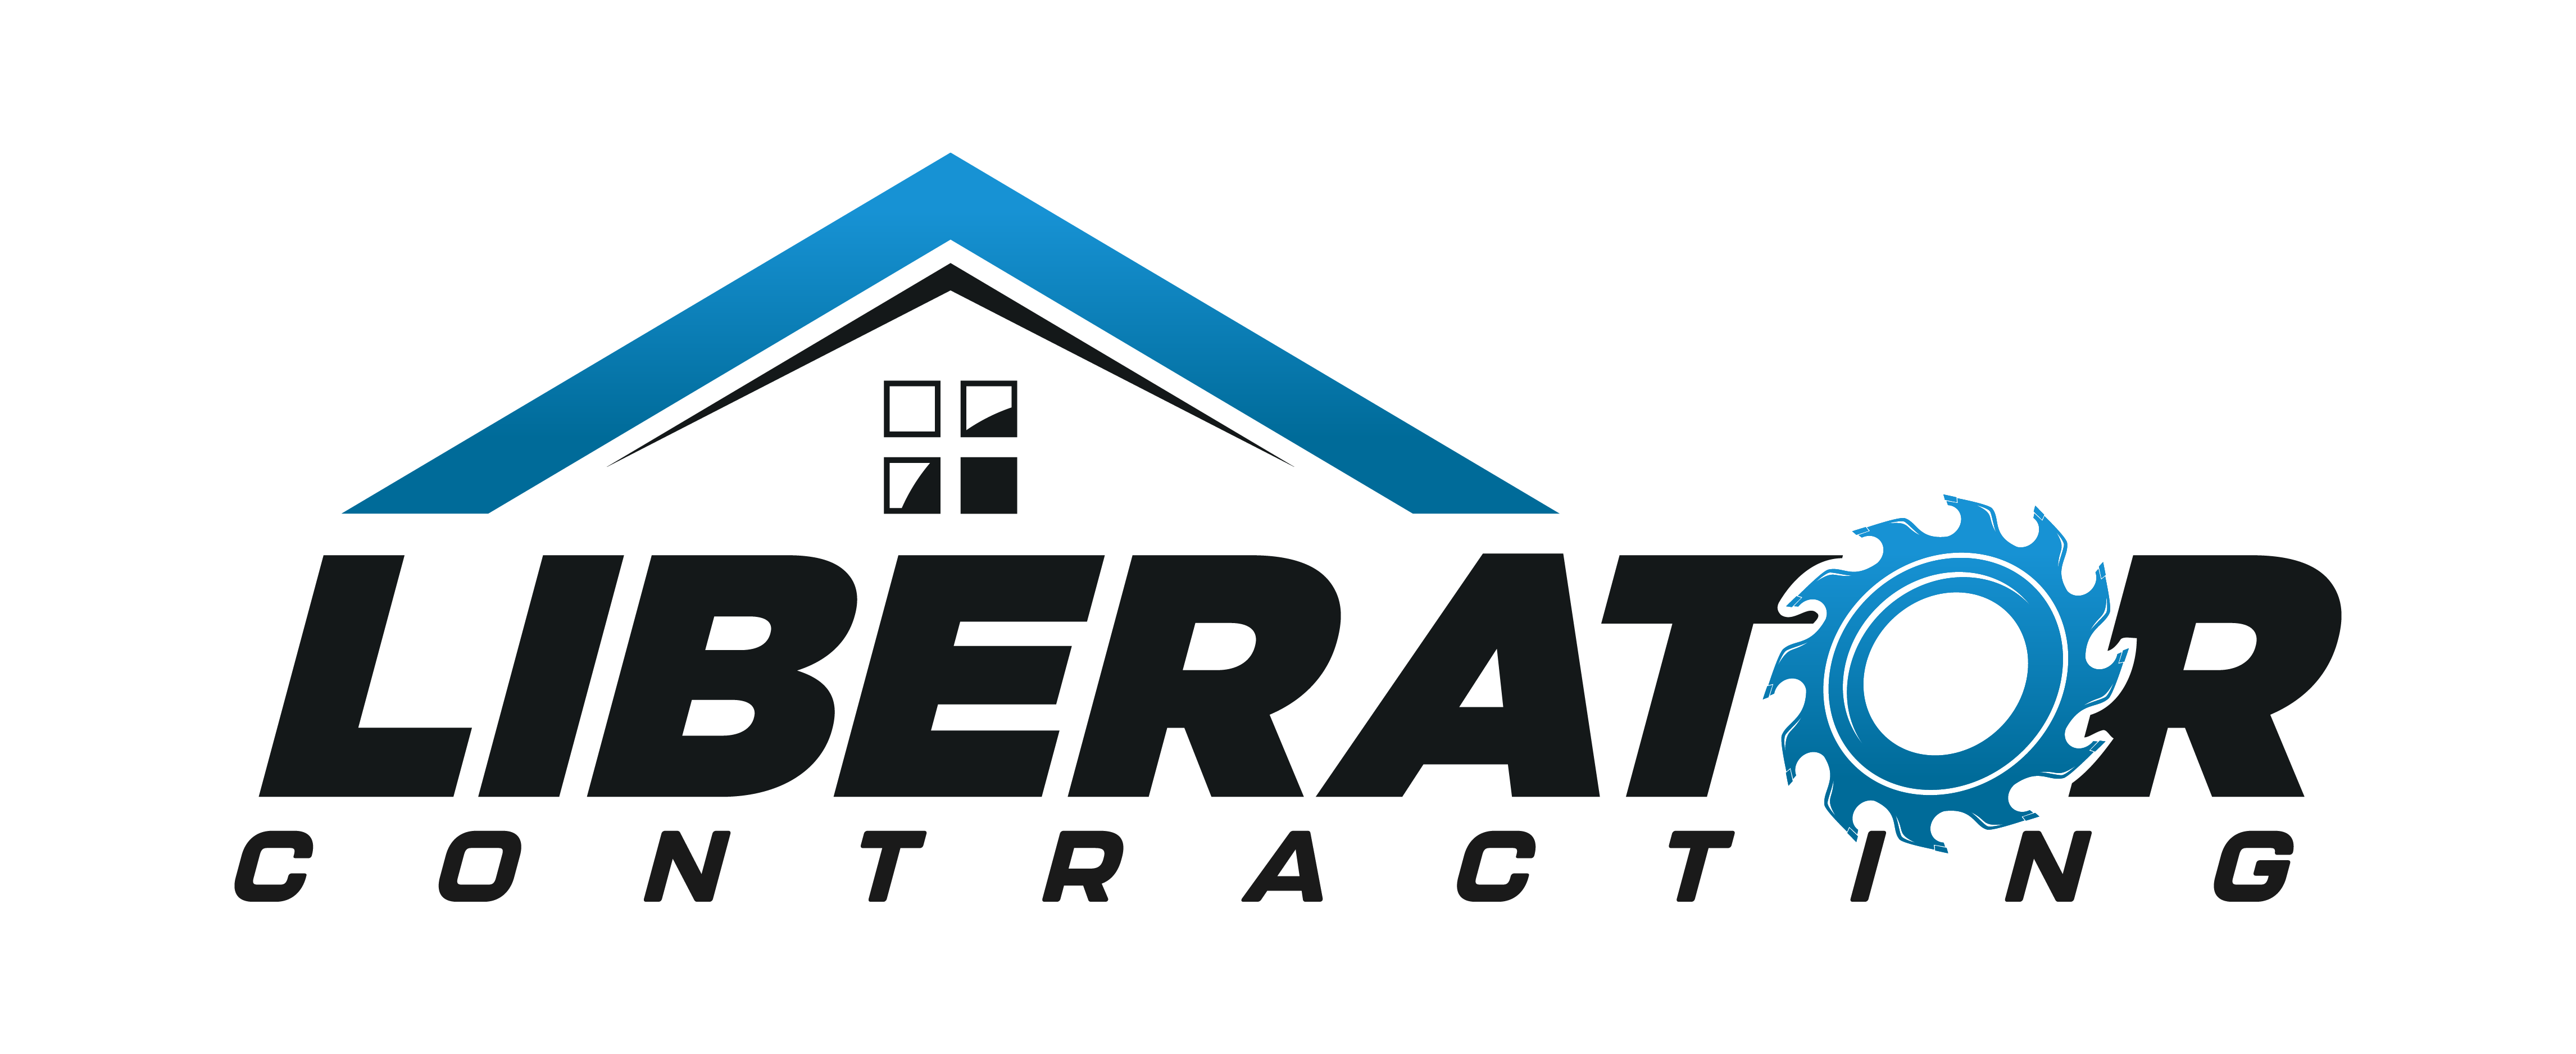 Liberator Contracting's logo